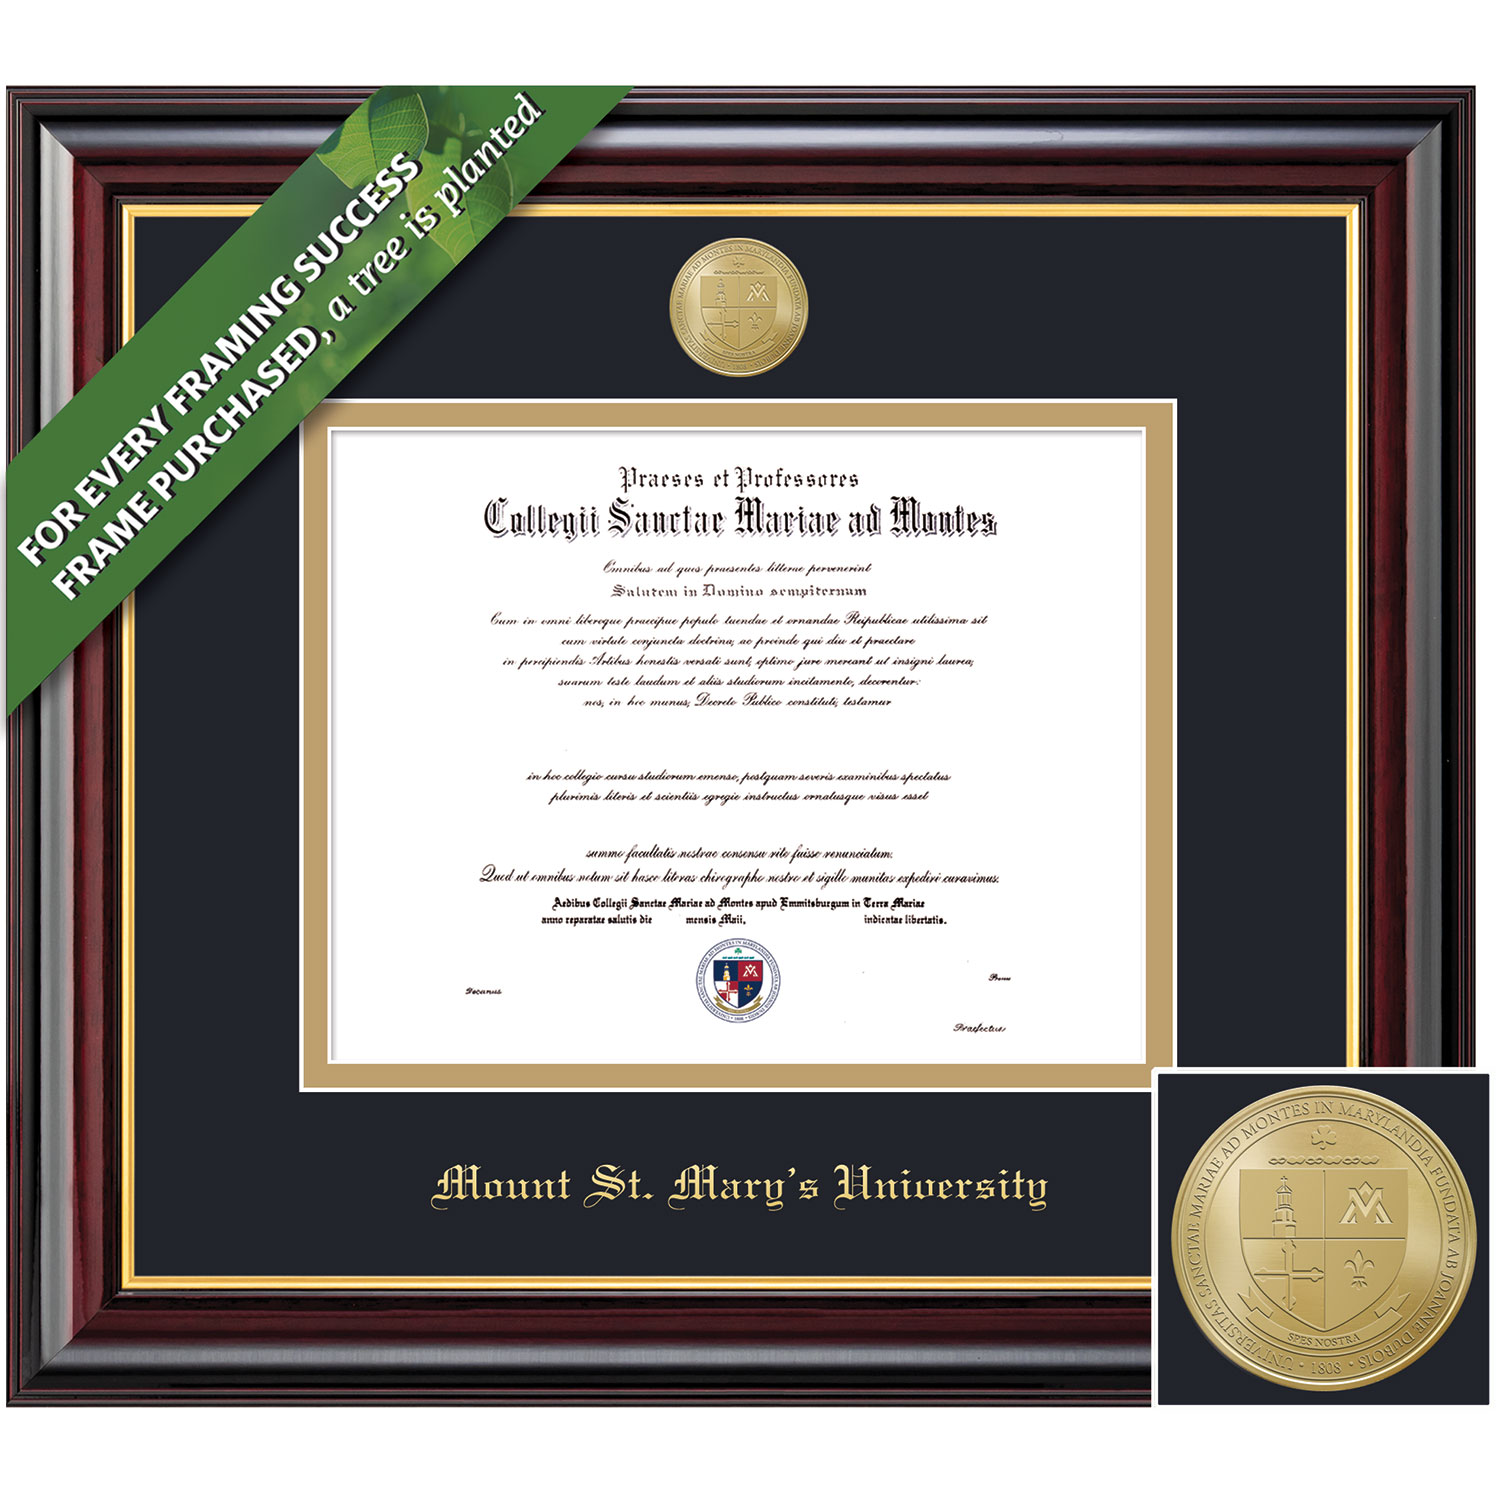 Framing Success 11 x 14 Windsor Gold Medallion Masters Diploma Frame